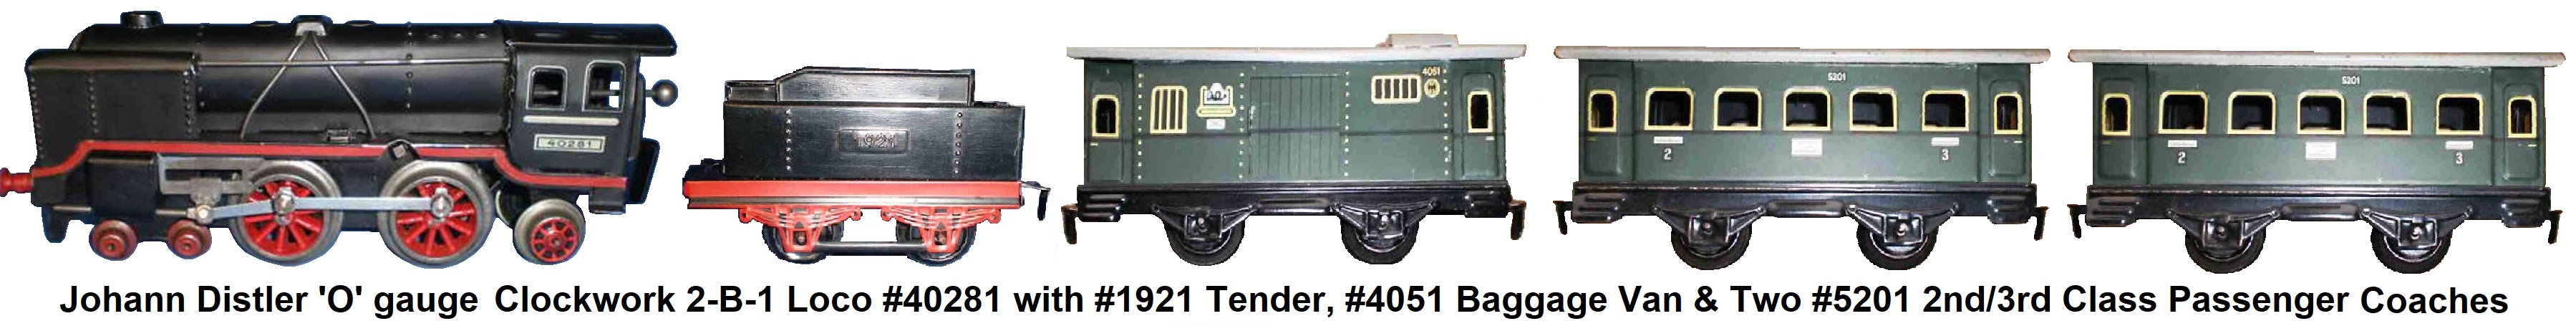 Johann Distler 'O' gauge tinplate lithographed passenger set with 4-4-2 clockwork loco #40281, tender #1921, #4051 baggage van, and 2 #5201 2nd/3rd class passenger wagons